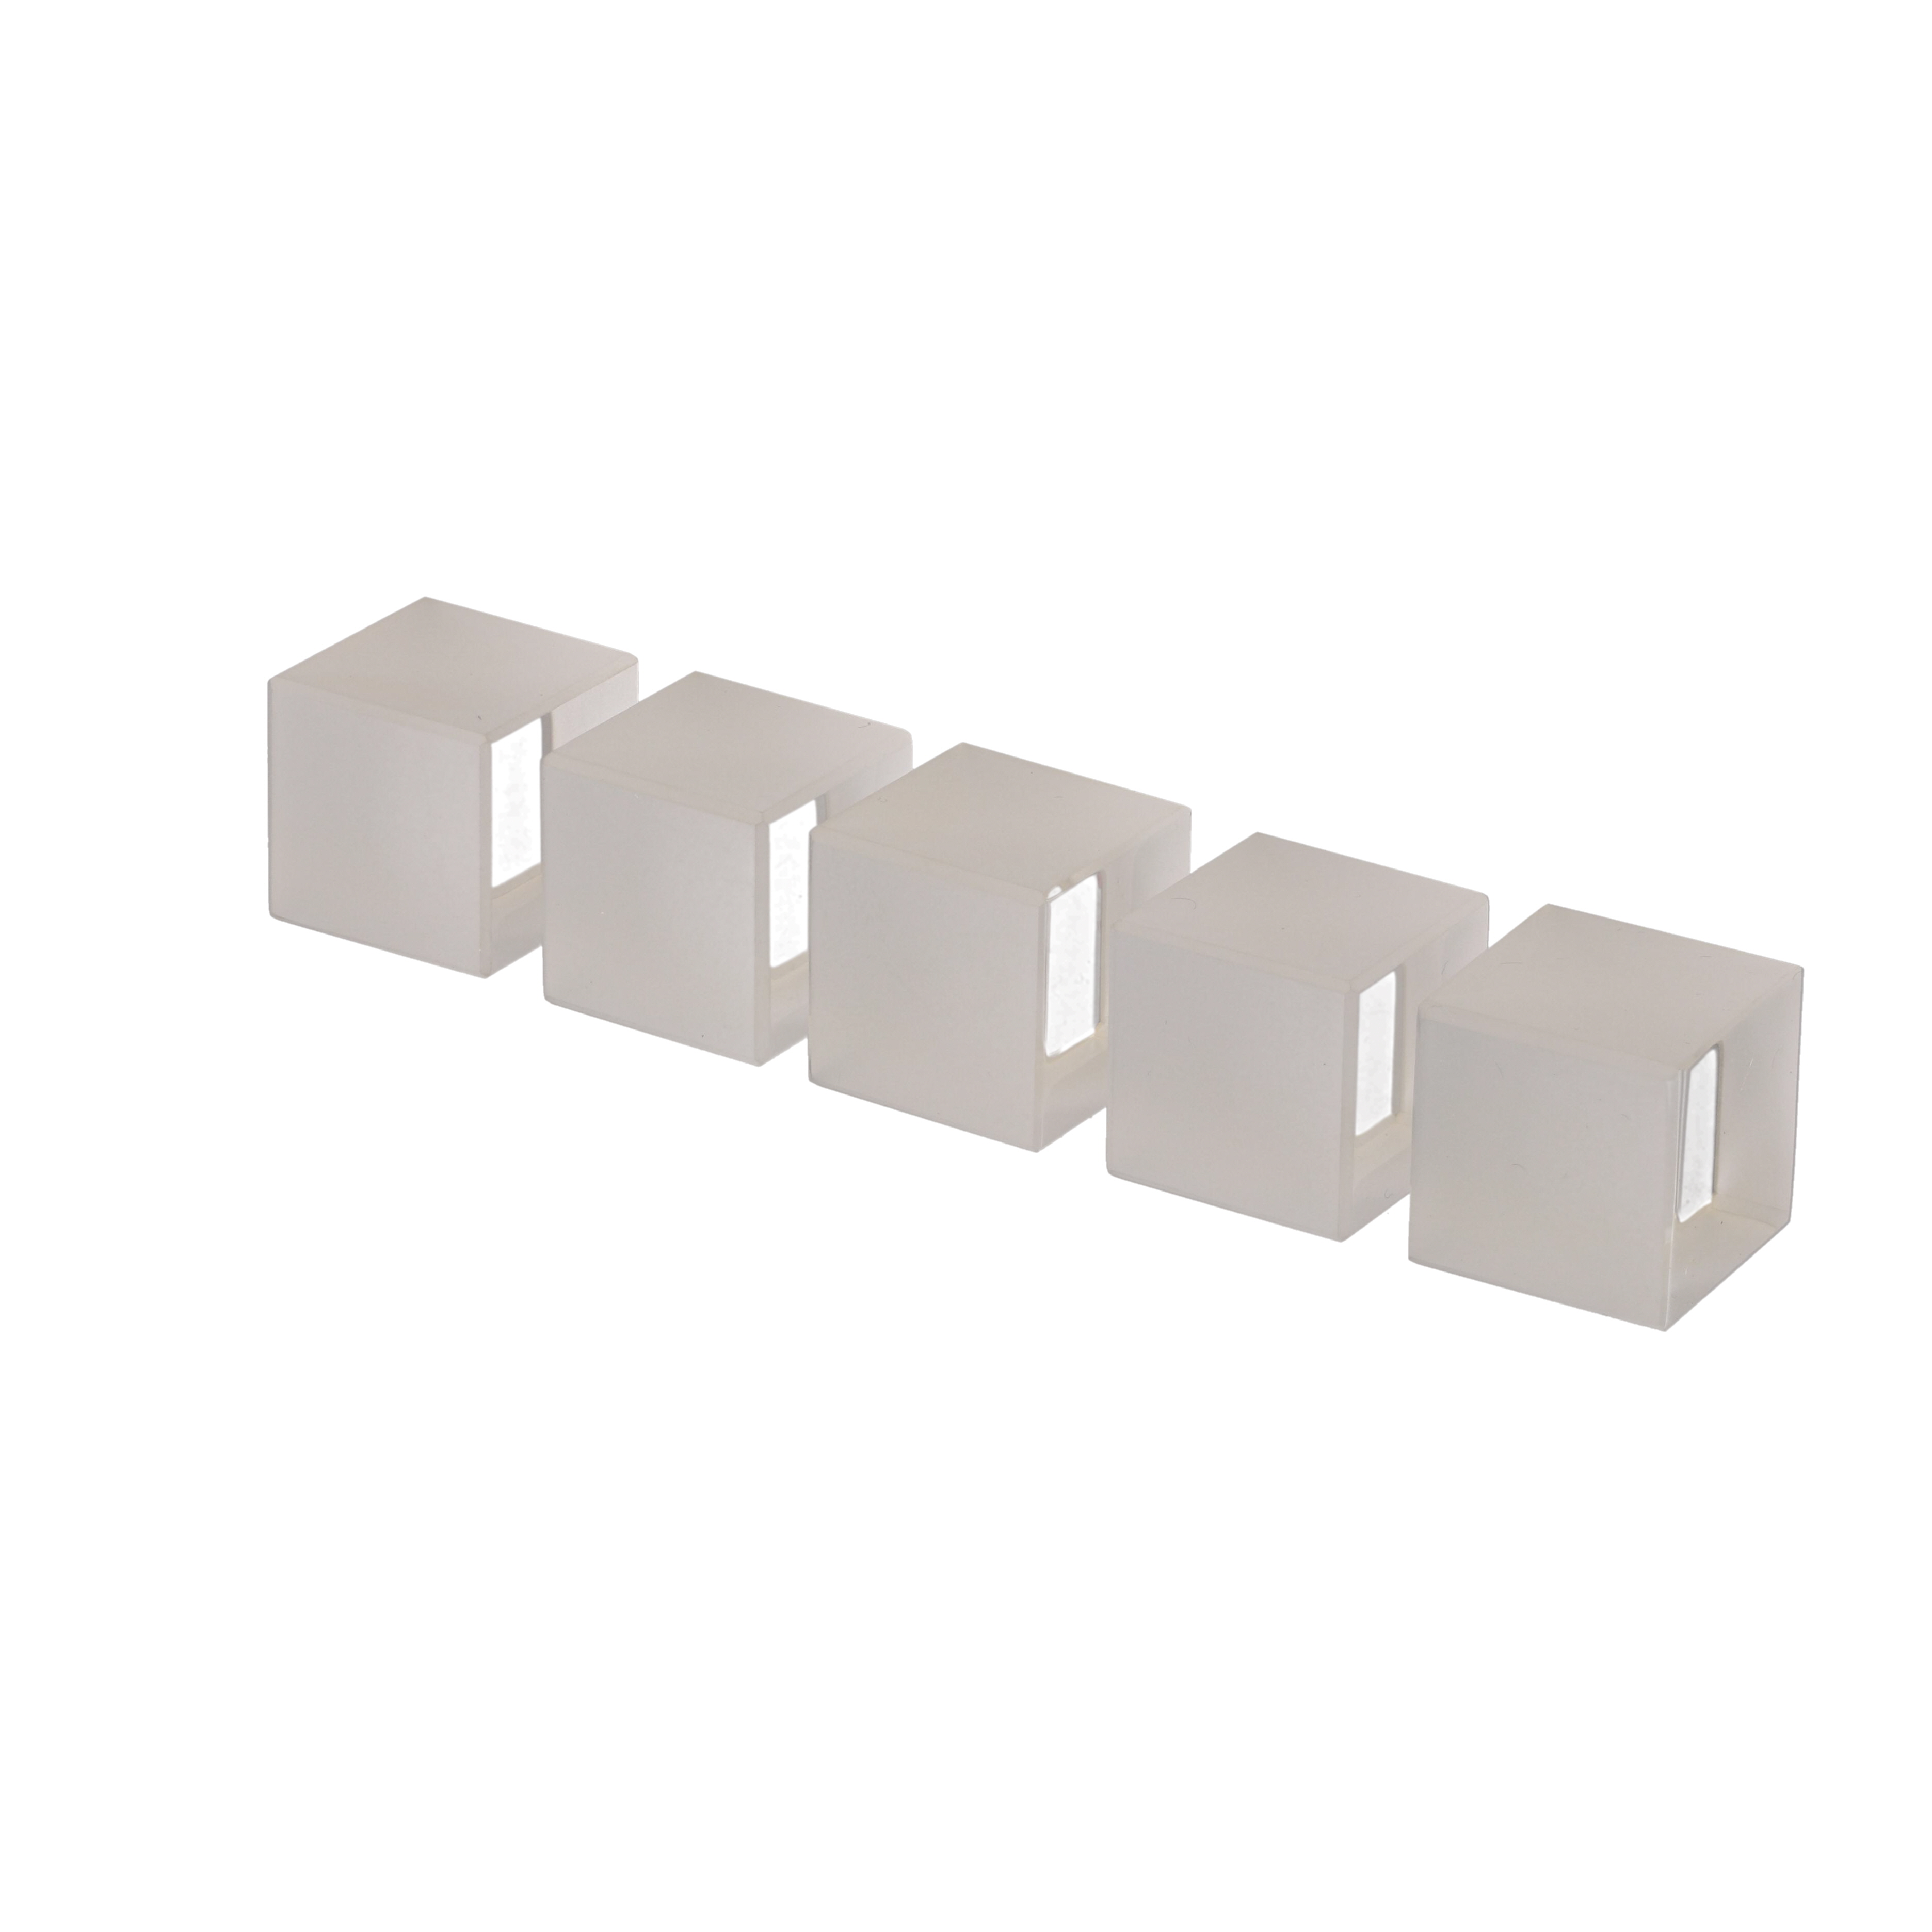 Cubes For Density Invest Plastic